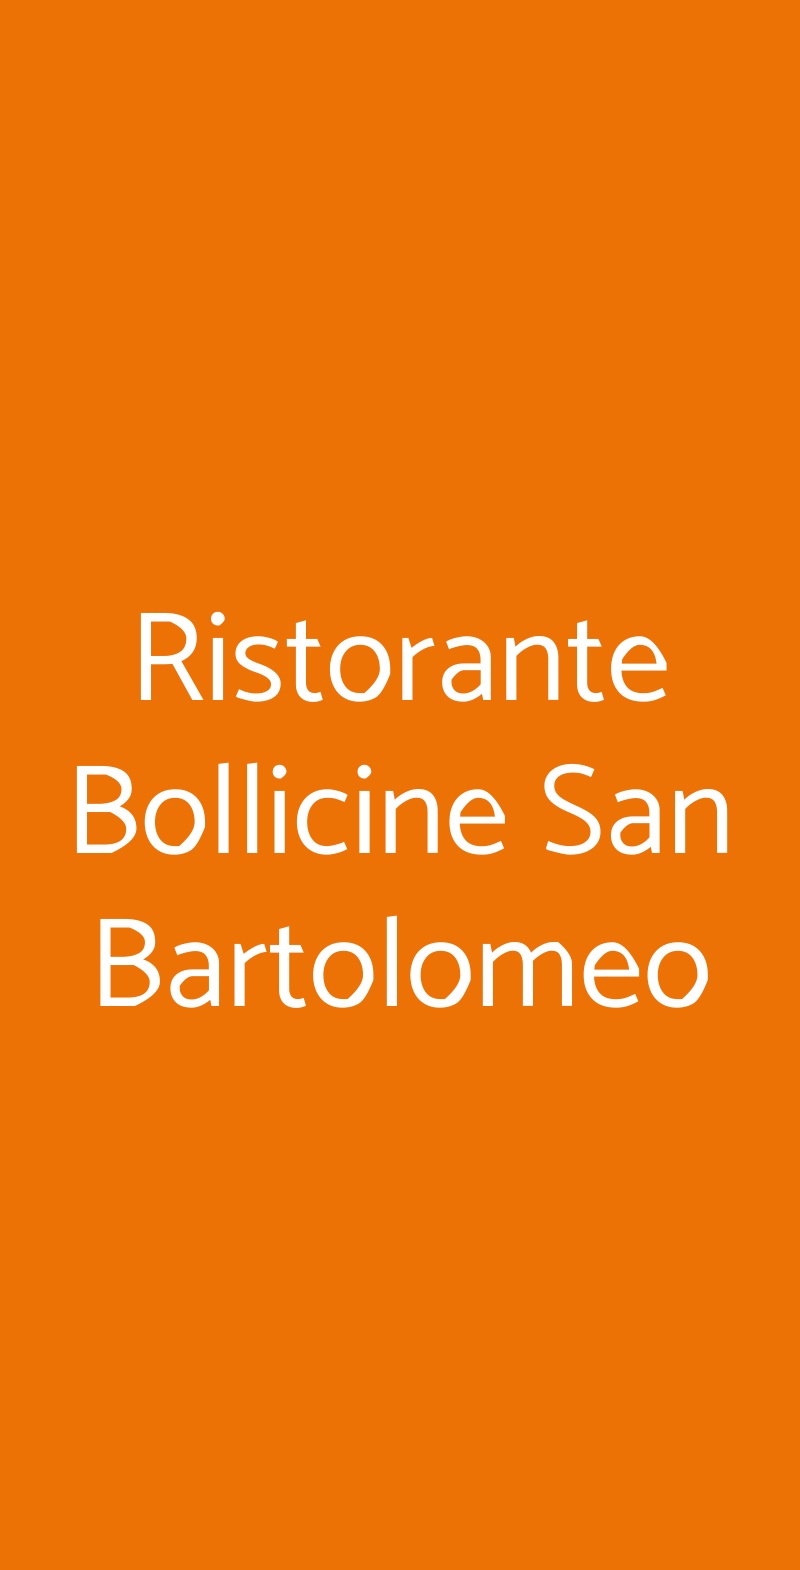 Ristorante Bollicine San Bartolomeo Parma menù 1 pagina